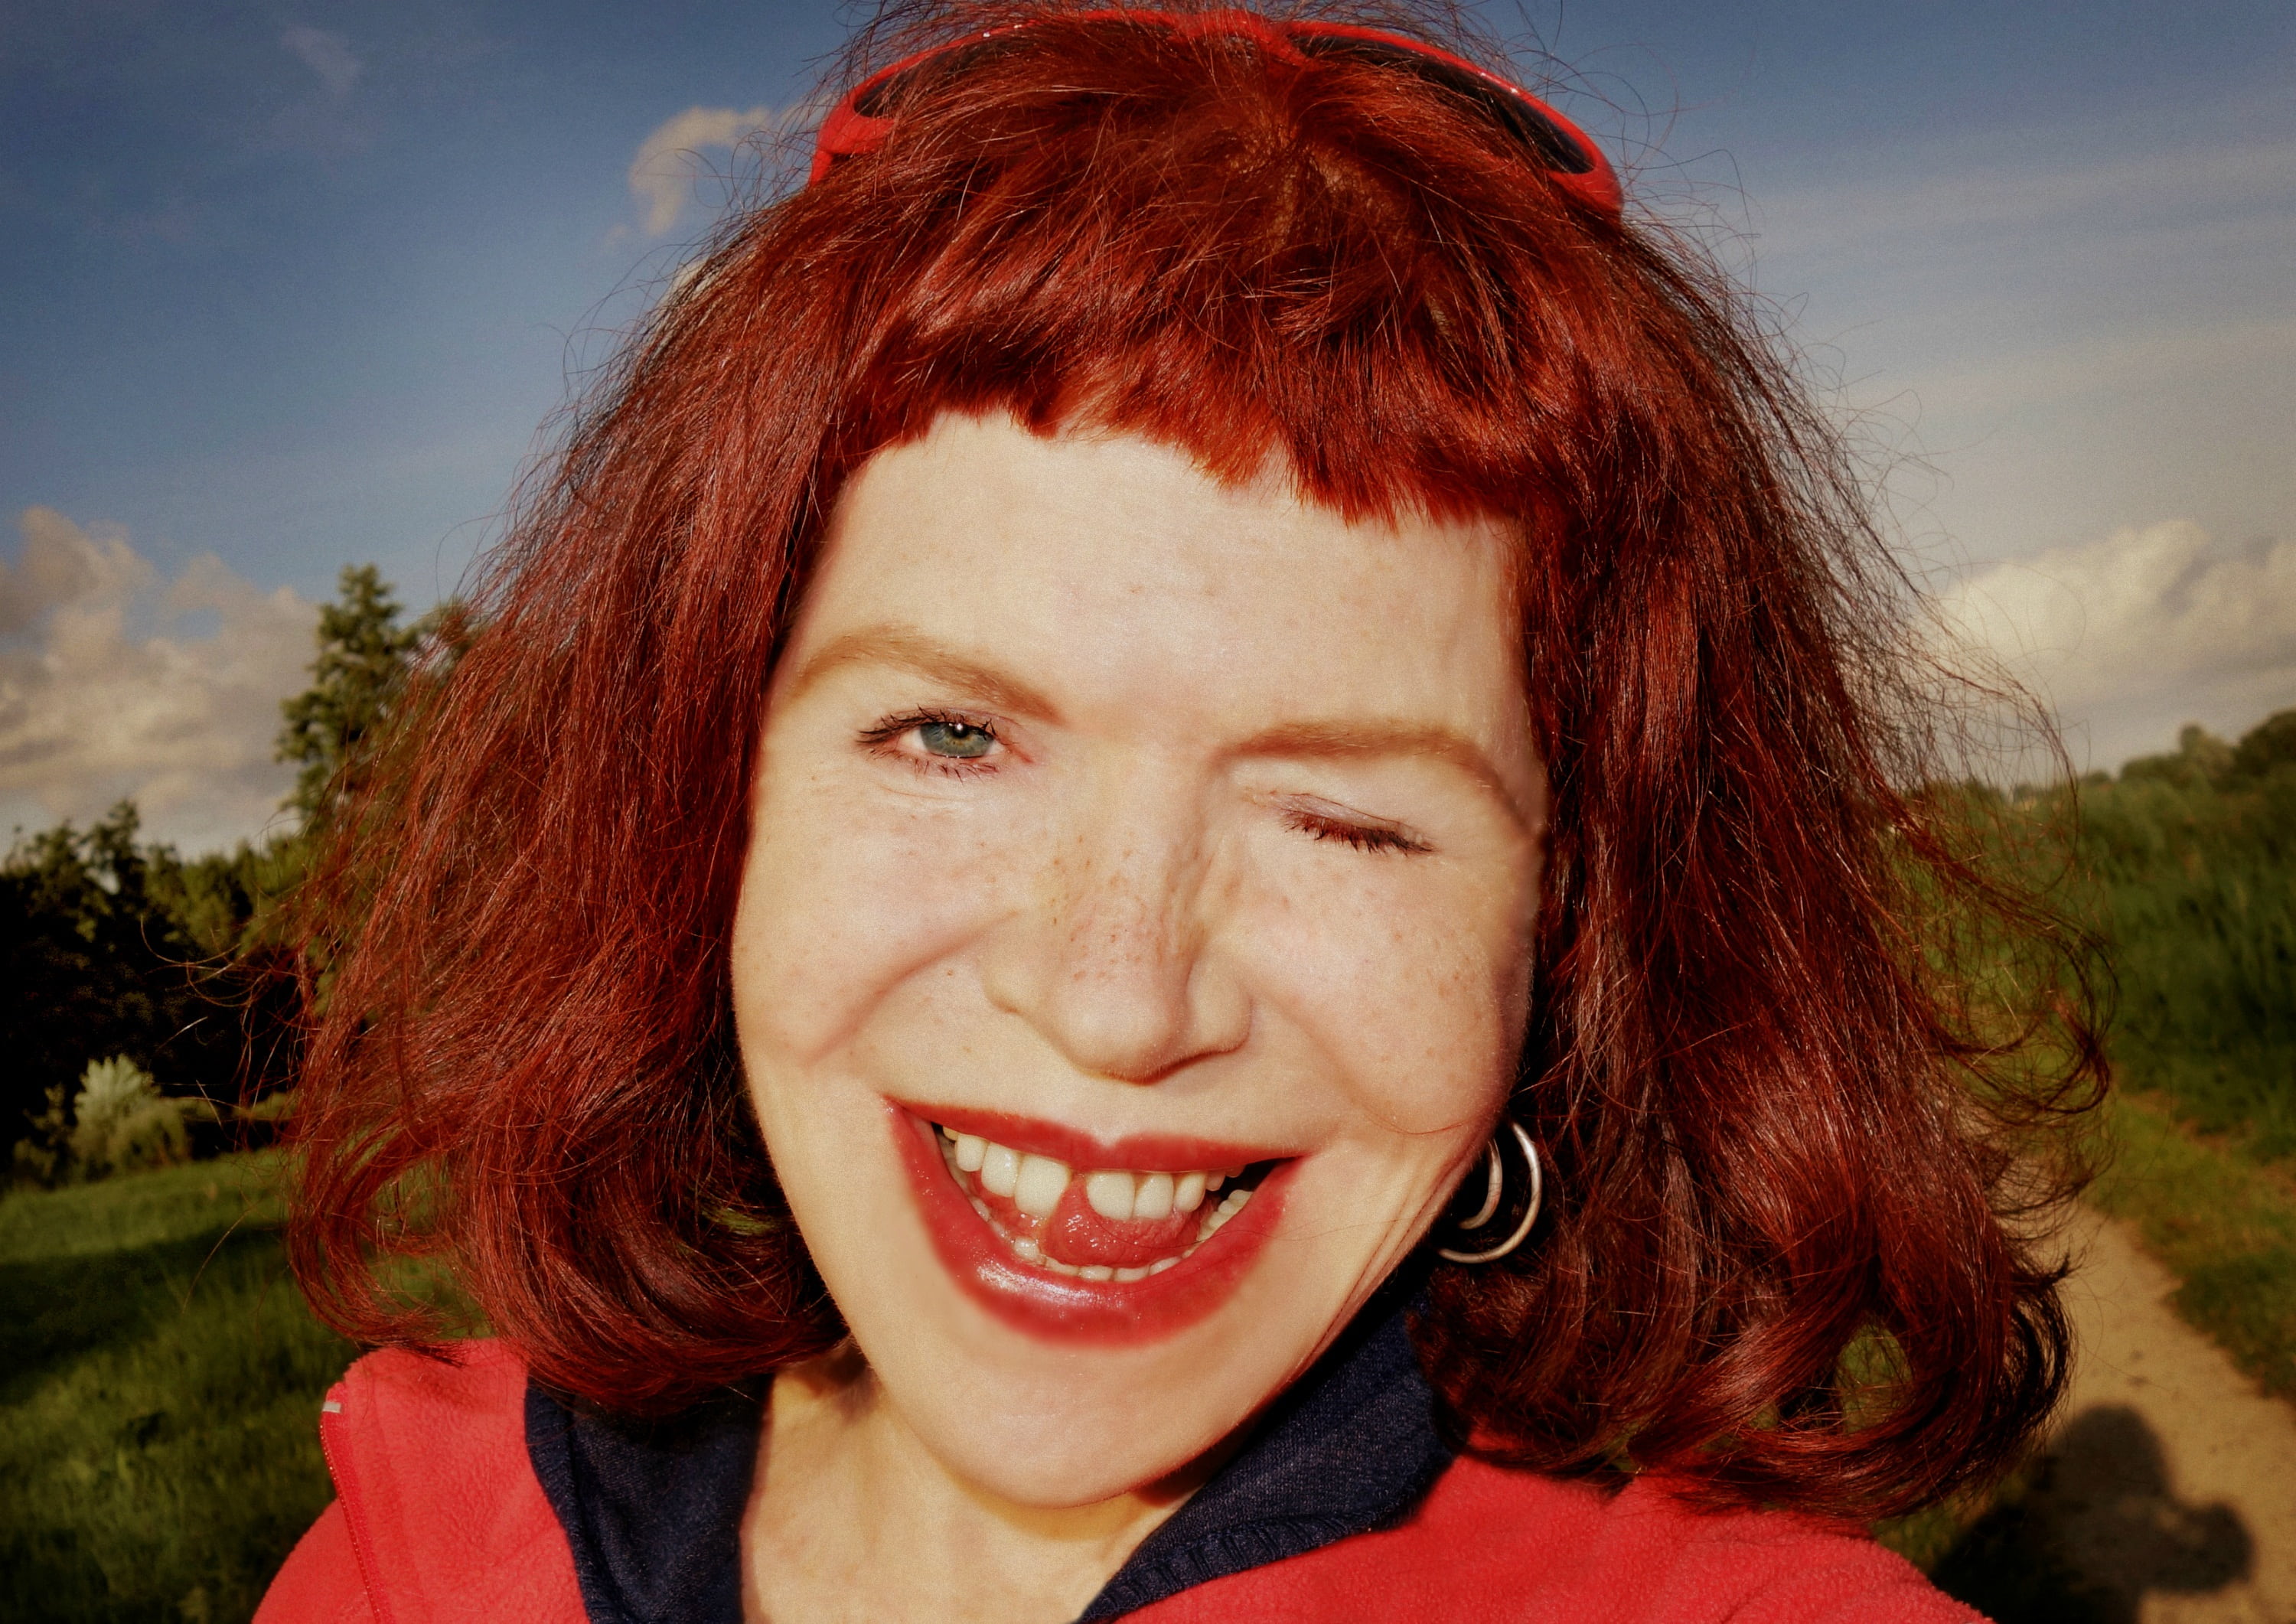 women's red and black top, portrait, face, woman, caucasian, smile